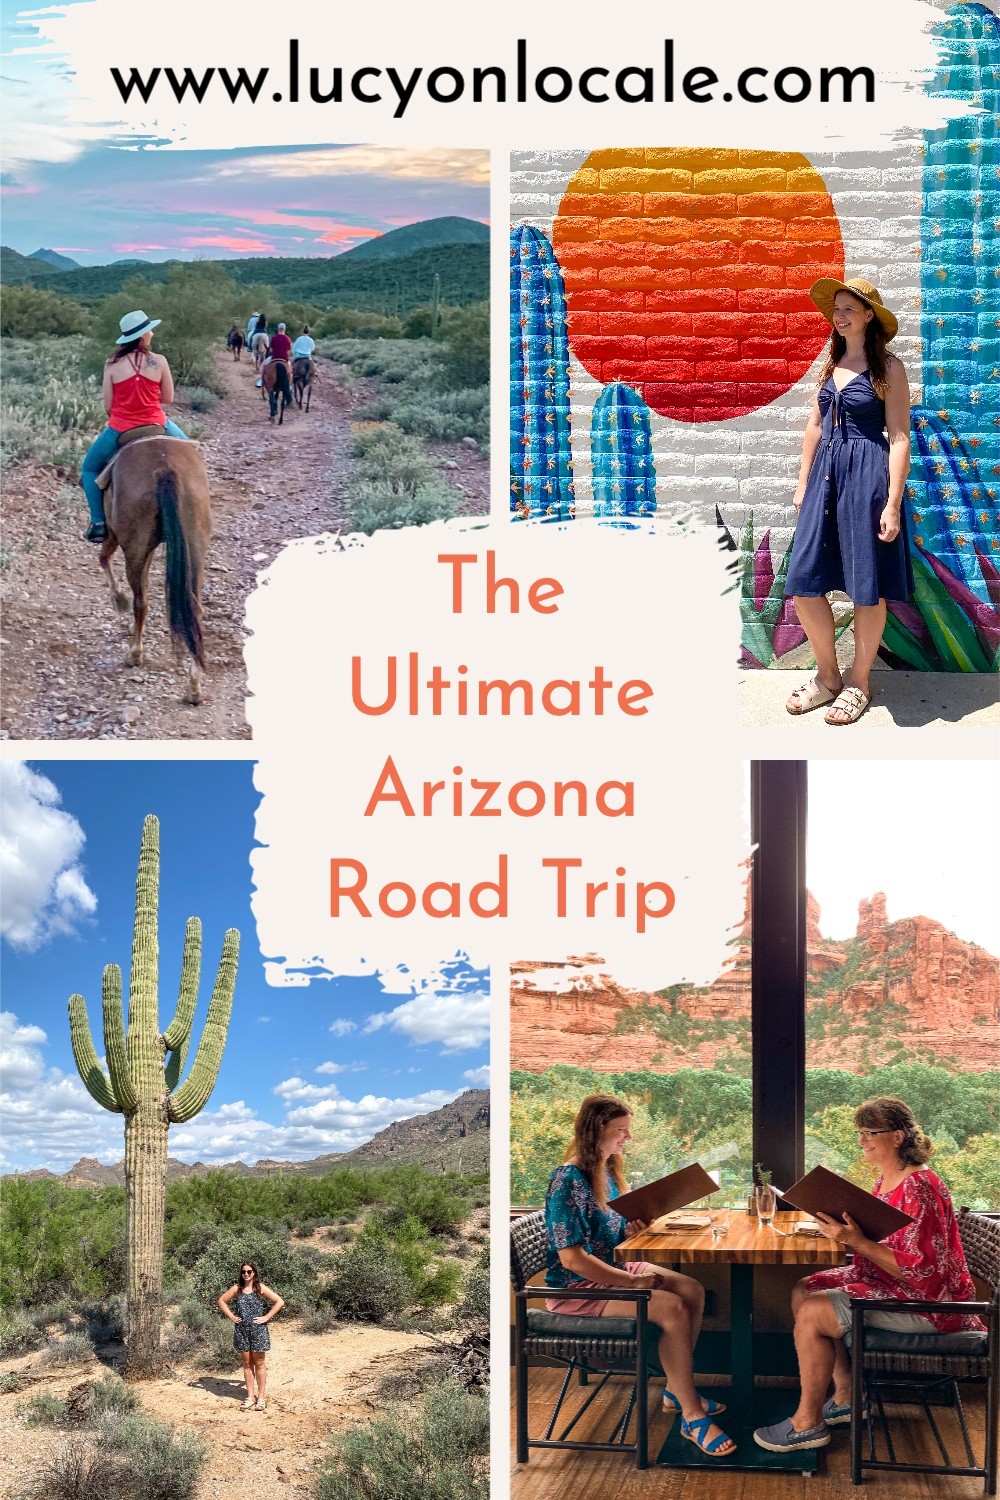 The Ultimate Arizona Road Trip